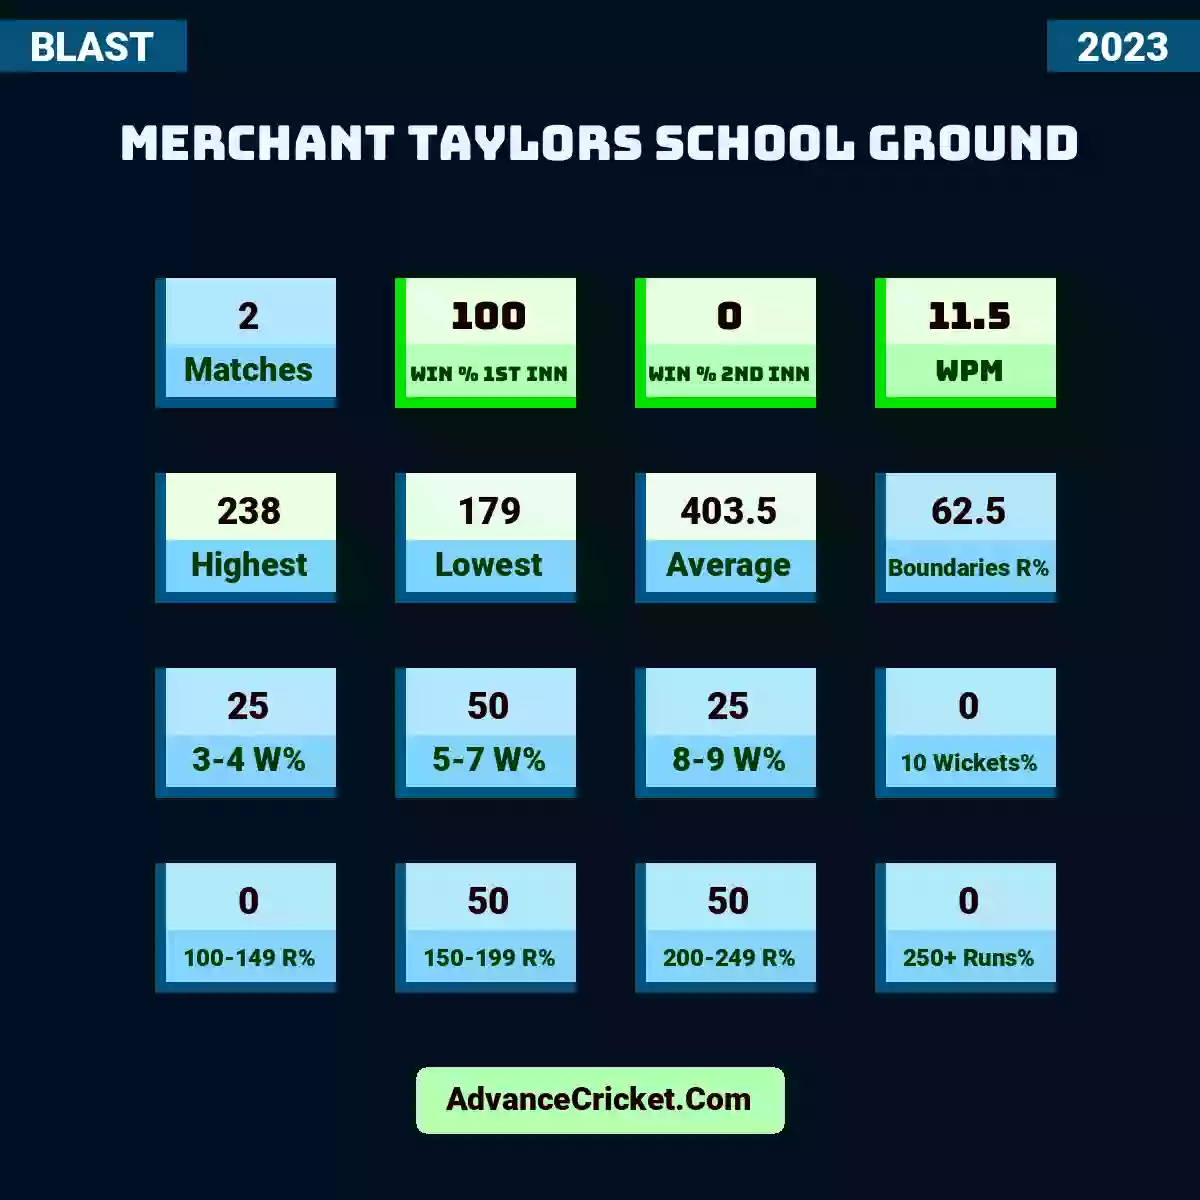 Image showing Merchant Taylors School Ground with Matches: 2, Win % 1st Inn: 100, Win % 2nd Inn: 0, WPM: 11.5, Highest: 238, Lowest: 179, Average: 403.5, Boundaries R%: 62.5, 3-4 W%: 25, 5-7 W%: 50, 8-9 W%: 25, 10 Wickets%: 0, 100-149 R%: 0, 150-199 R%: 50, 200-249 R%: 50, 250+ Runs%: 0.